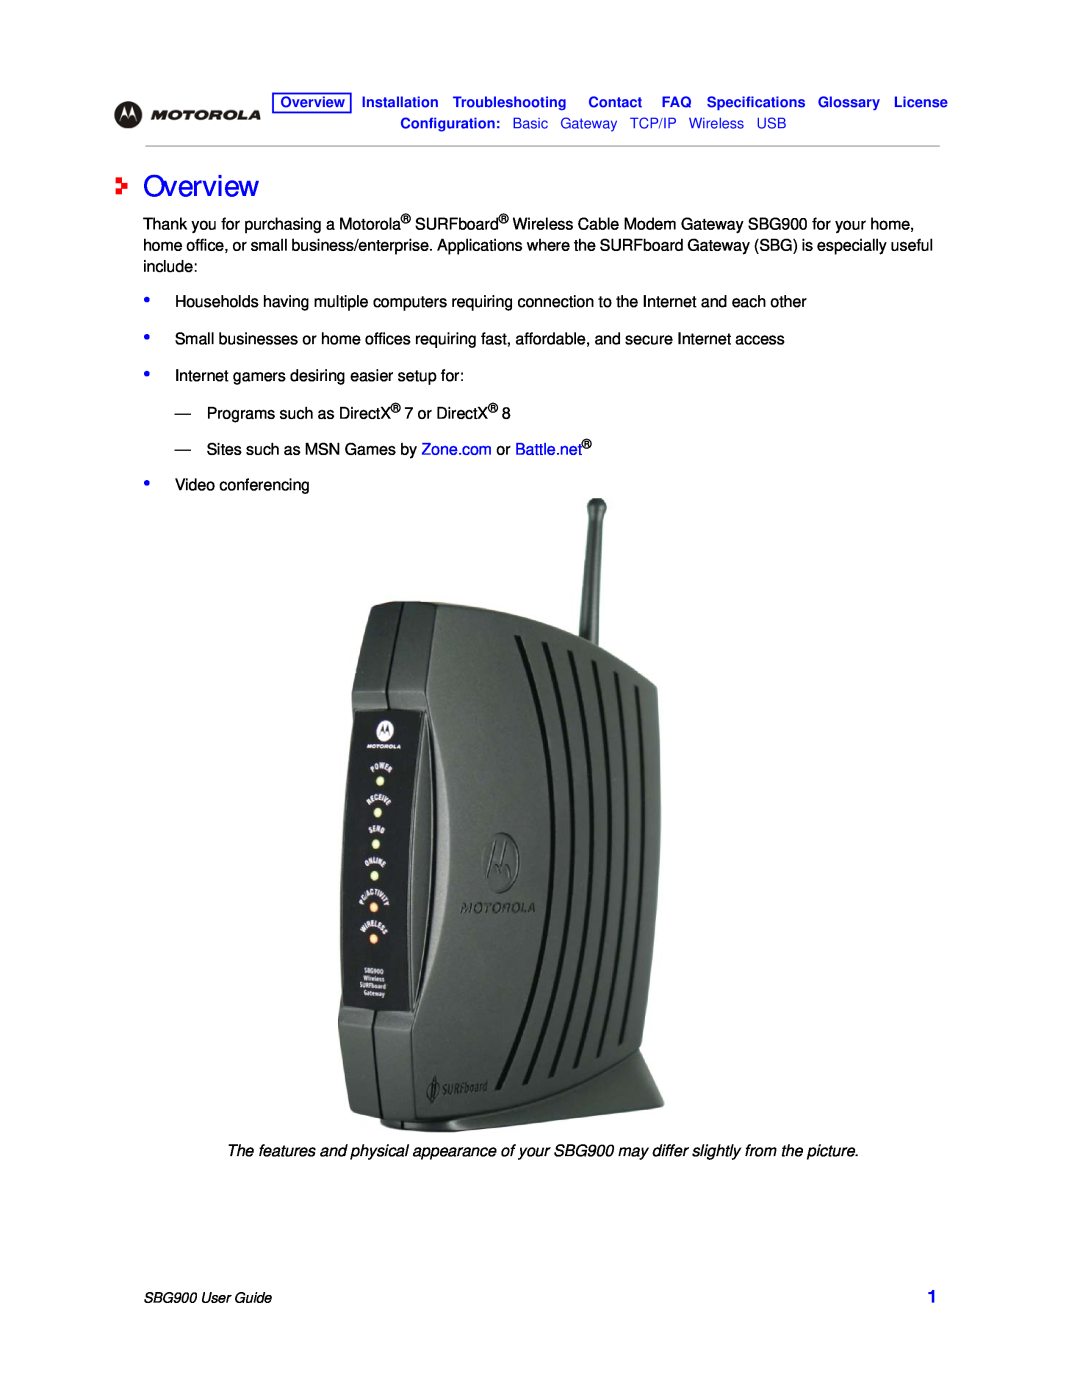 Motorola SBG900 manual Overview 